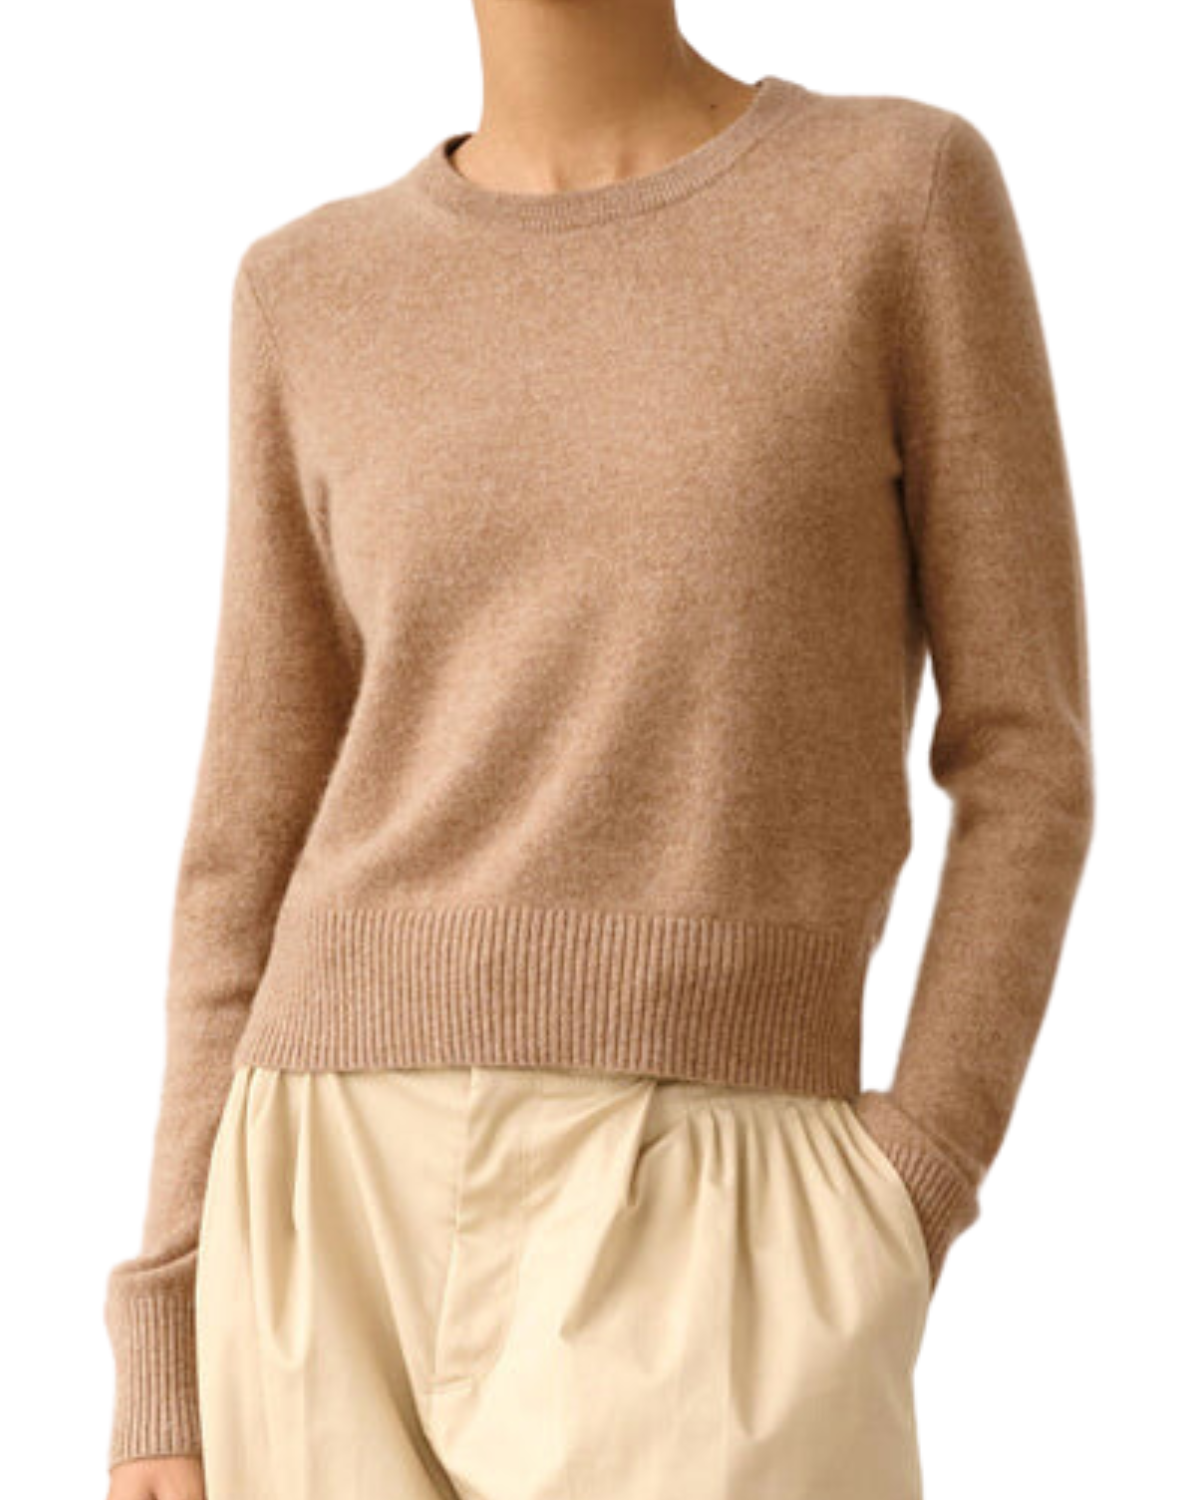 Cashmere Shrunken Crewneck Sweater (Camel Heather)